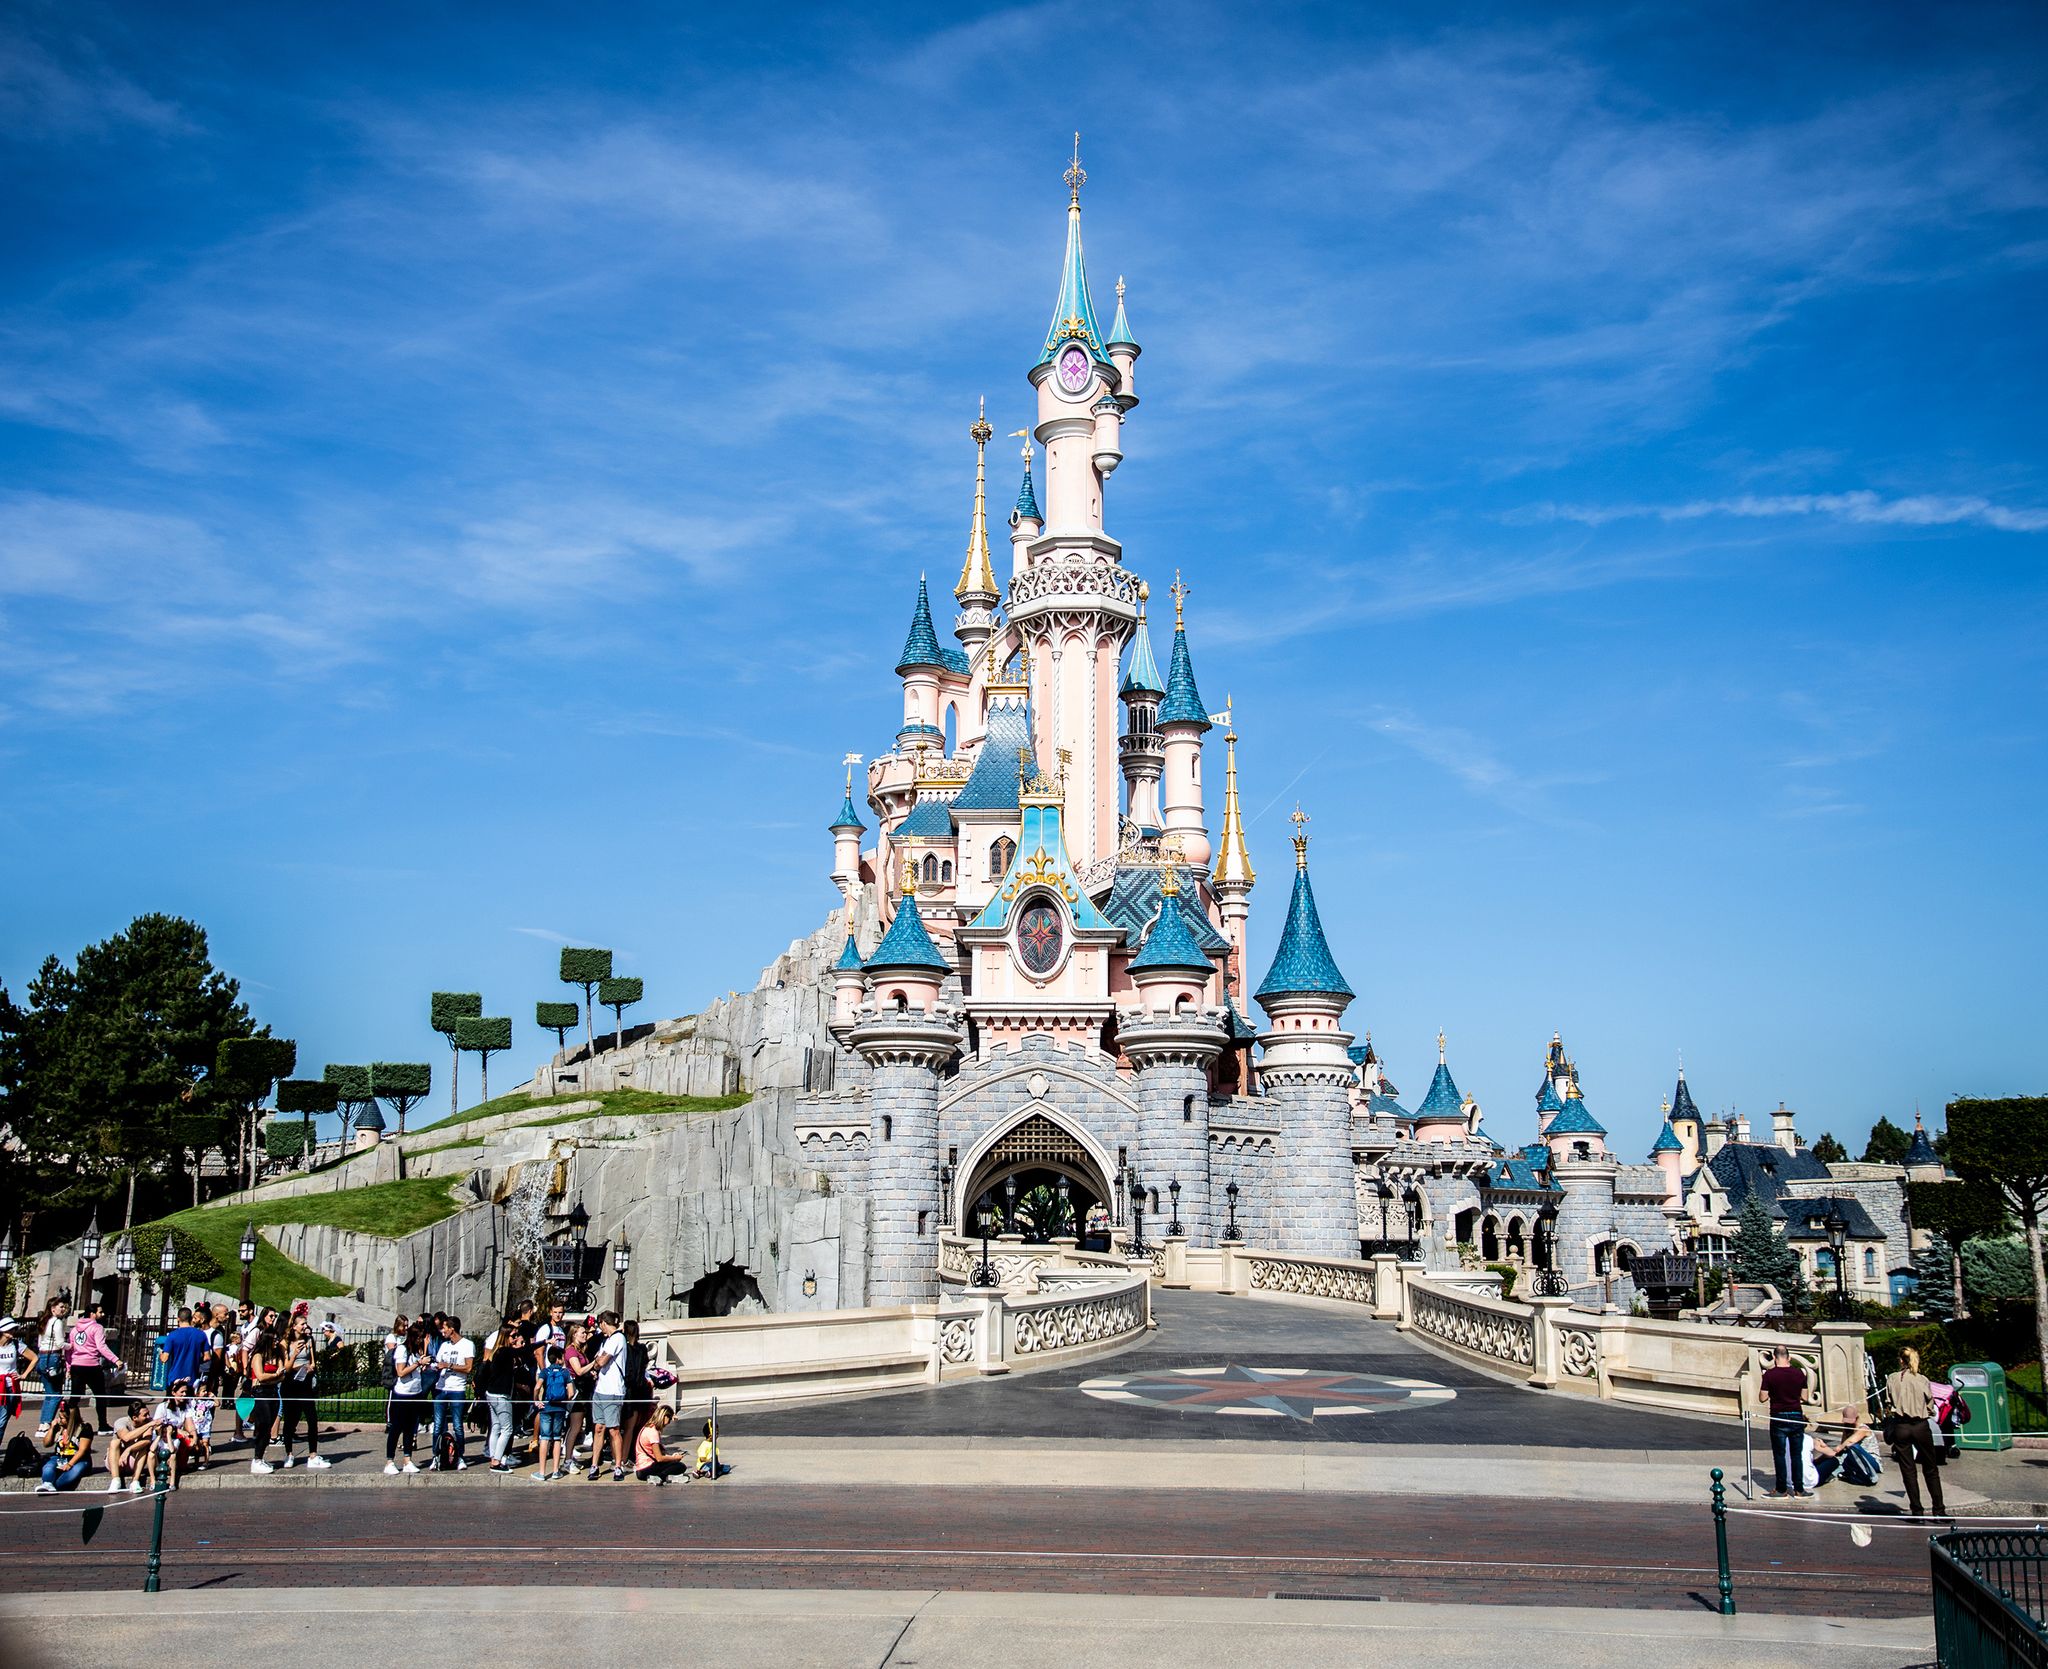 Dream Castle - 4* hotel near Disneyland - free shuttle